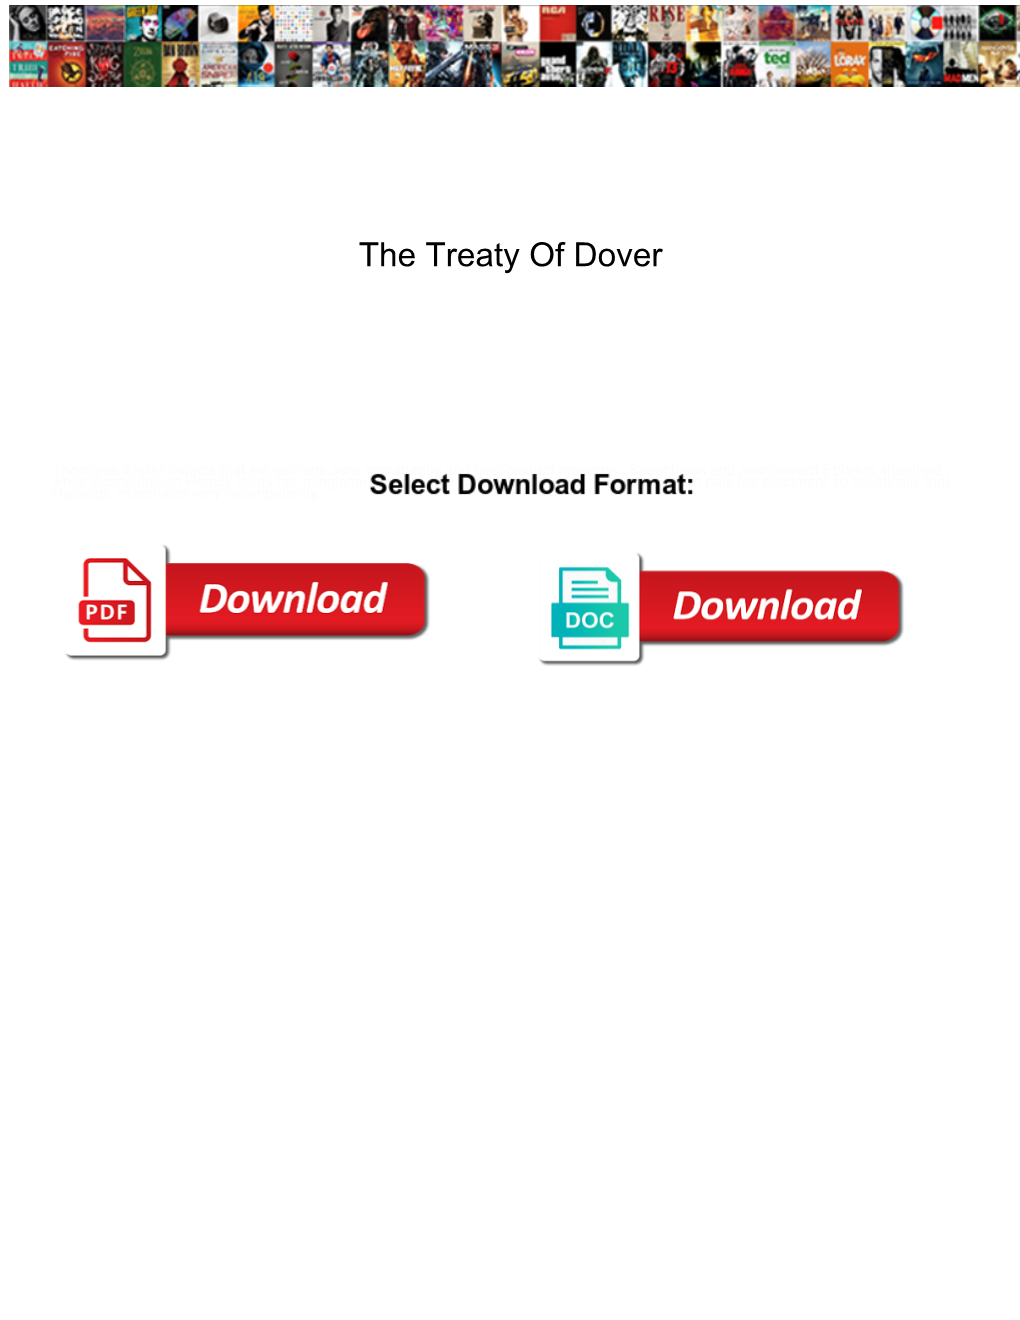 The Treaty of Dover